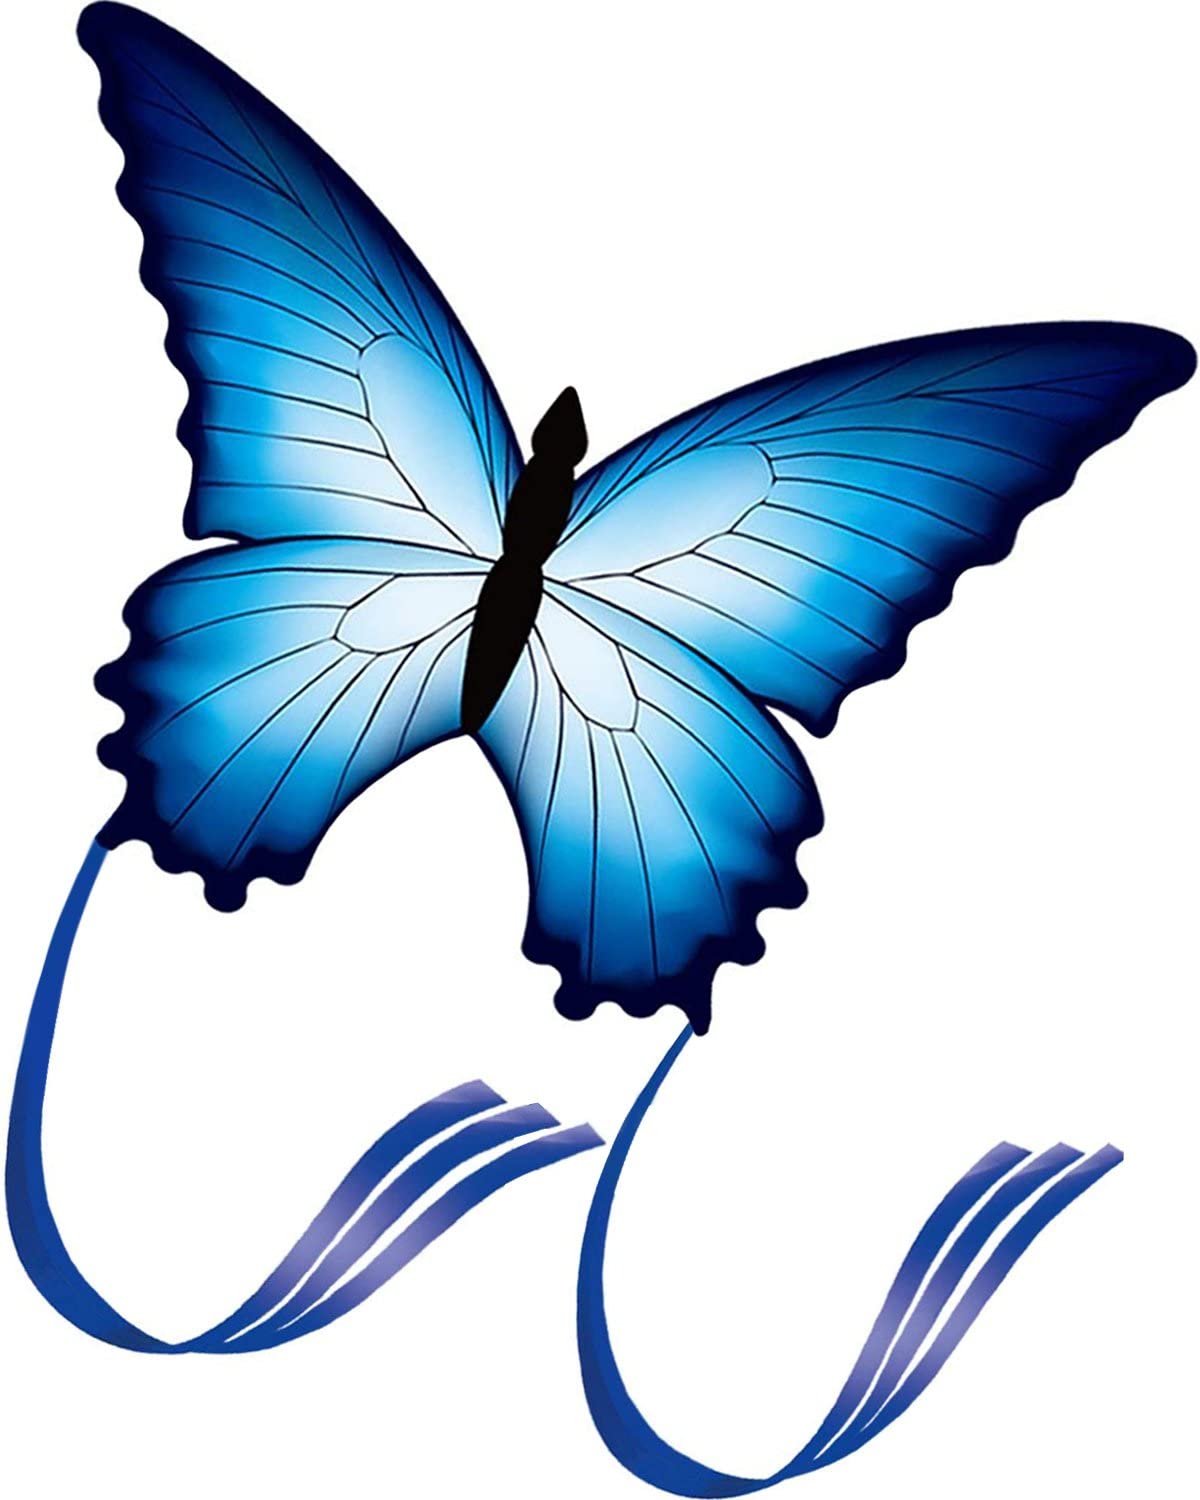 HENGDA KITE for Kids So Beautiful Butterfly Kite